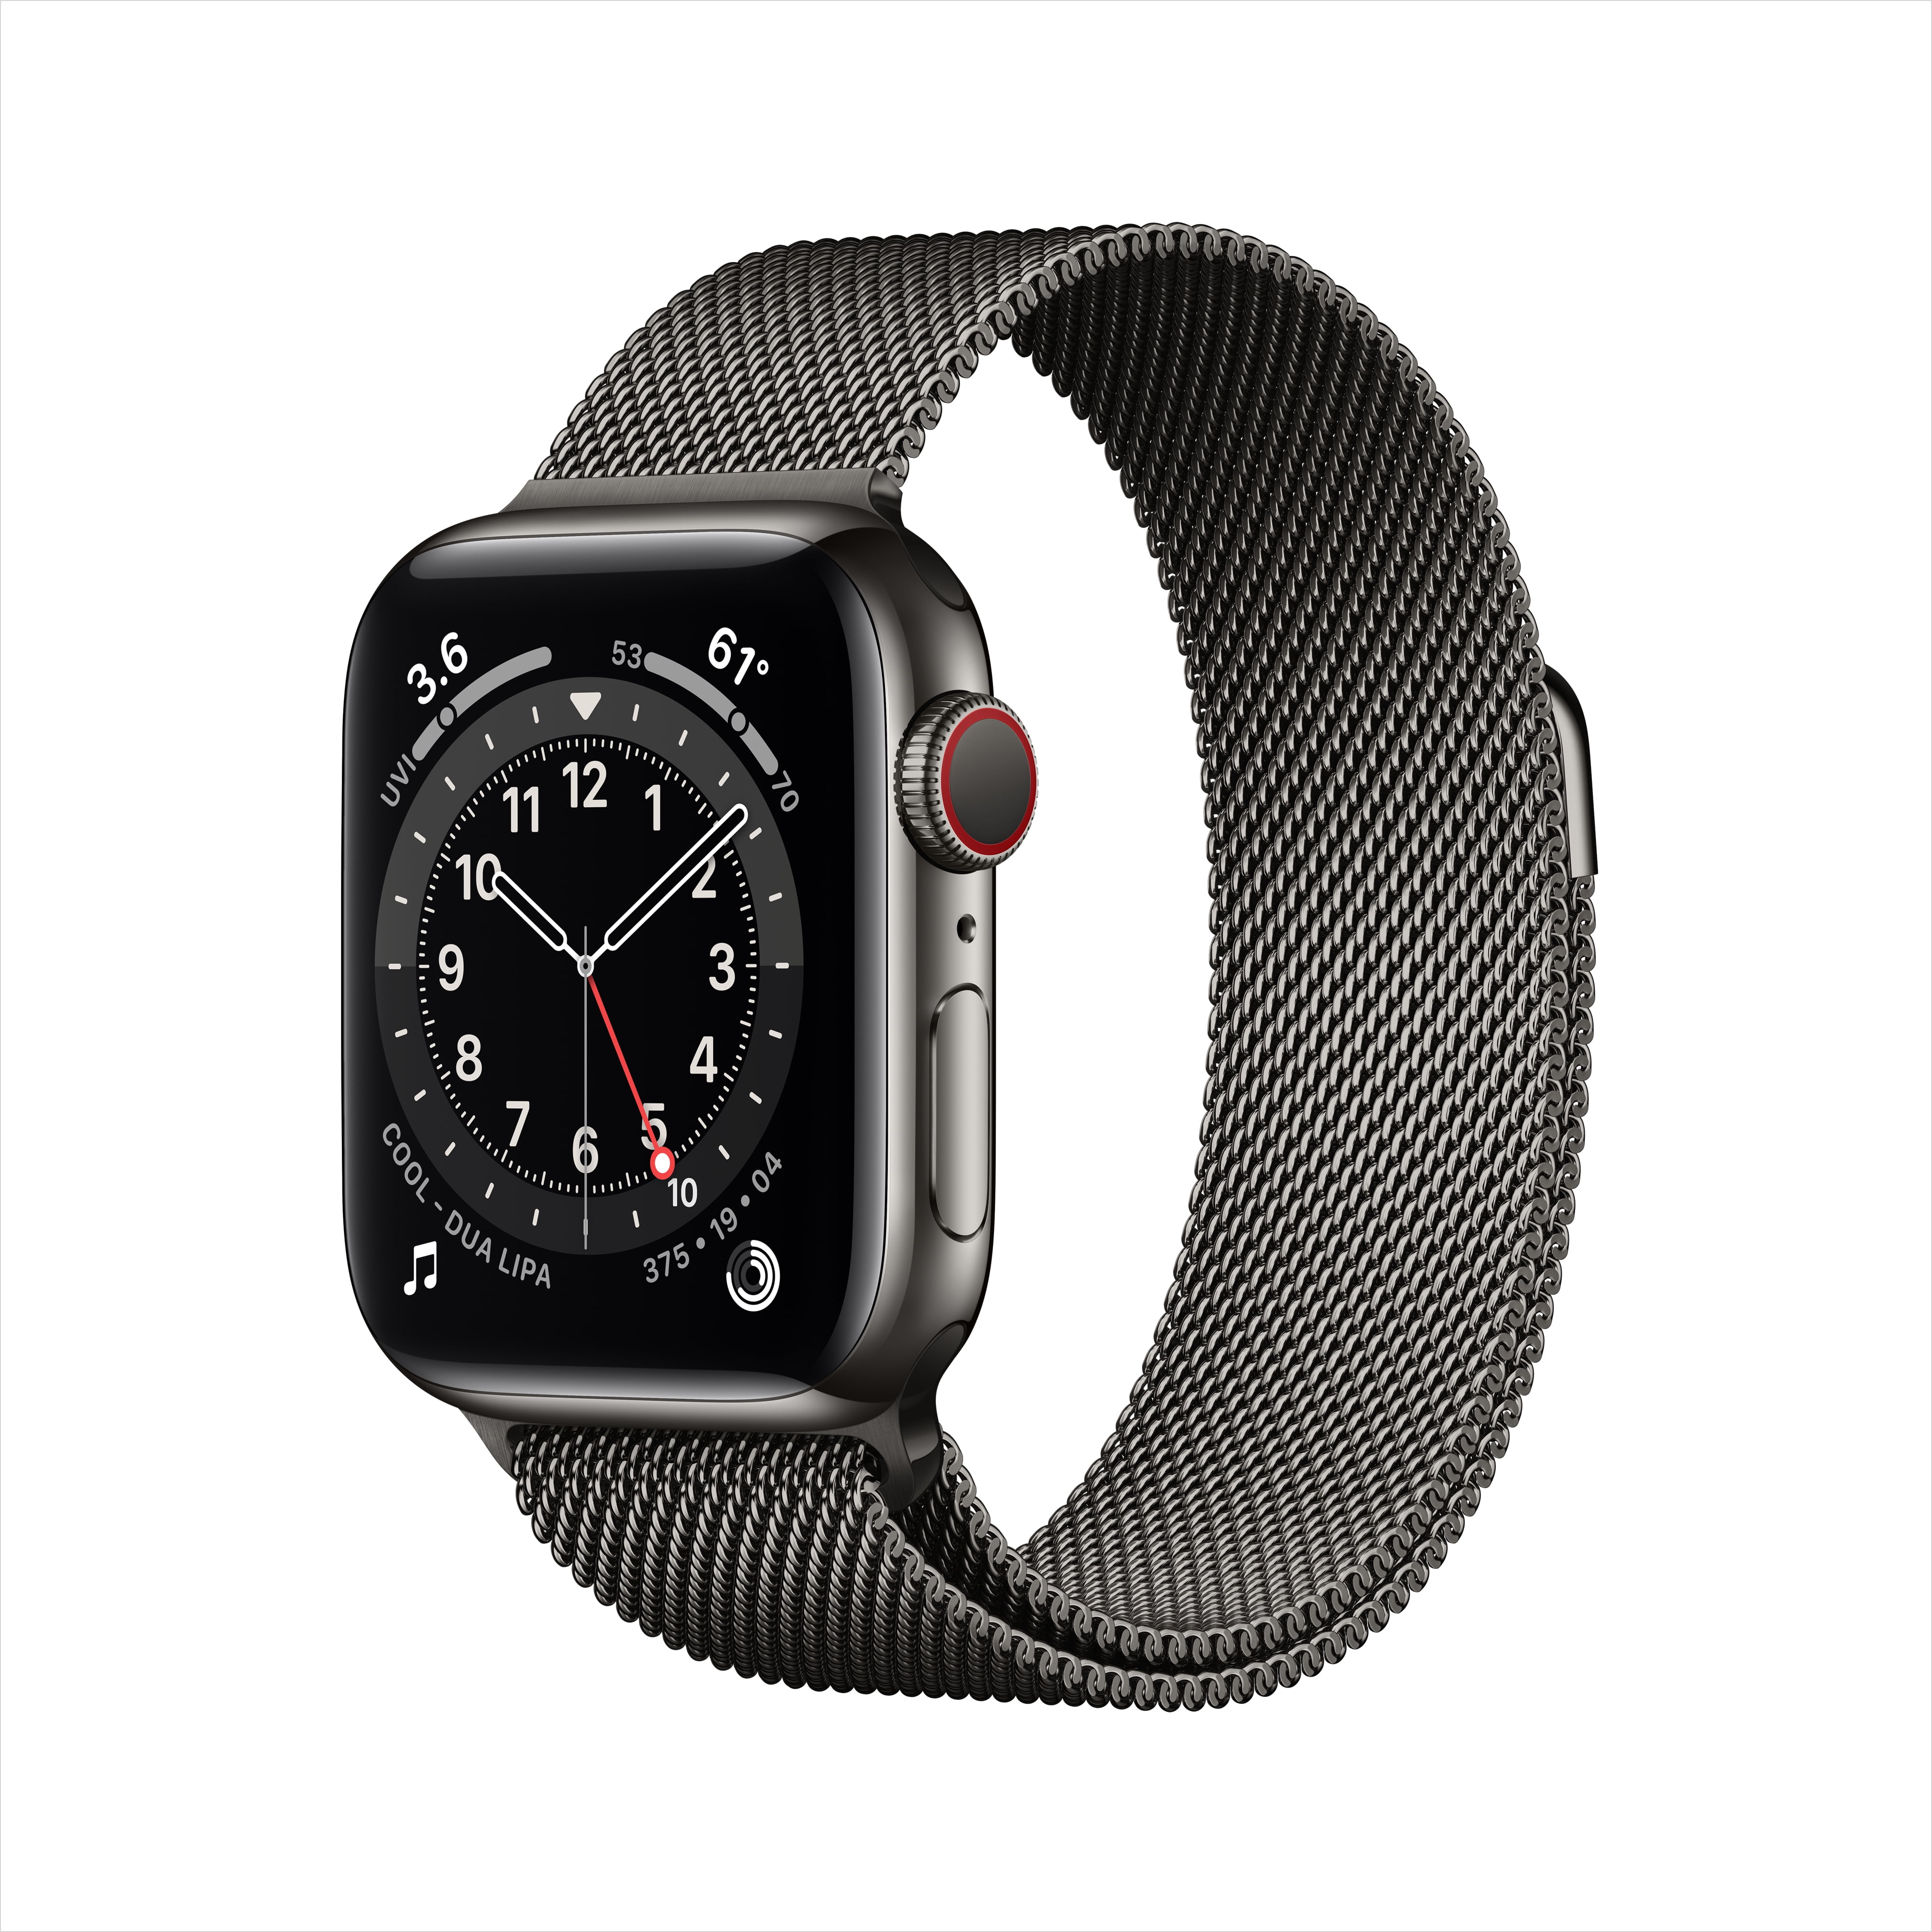 Apple Watch Series 5 ステンレス 40mm | myglobaltax.com